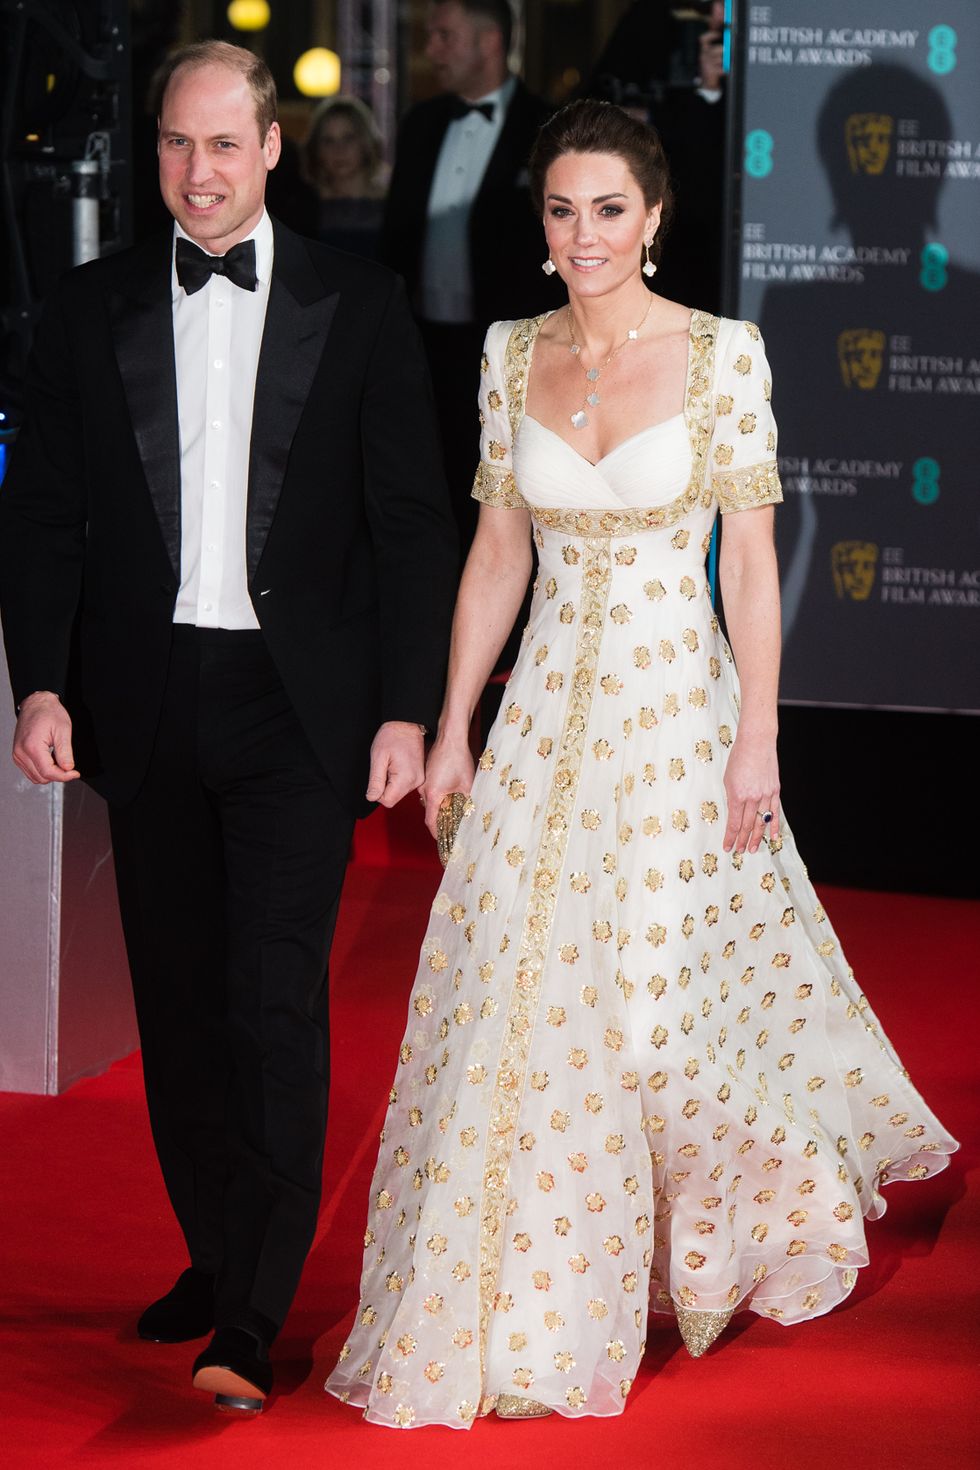 ee british academy film awards 2020  red carpet arrivals